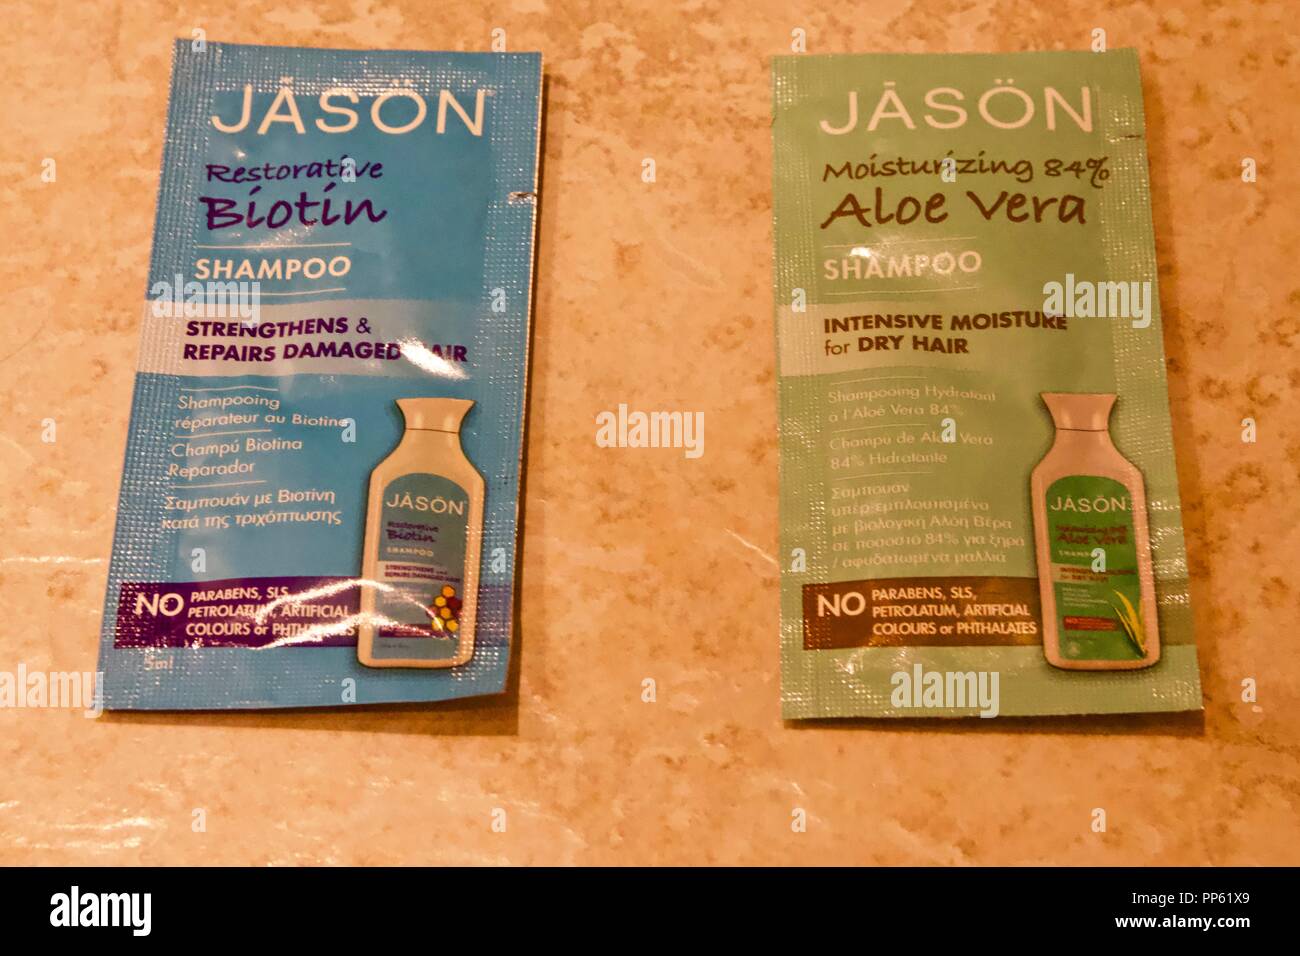 Two Single Use Shampoo of Jason Shampoo, one called Restorative Biotin and one called Moisturizing 84% Aloe Vera Photo - Alamy